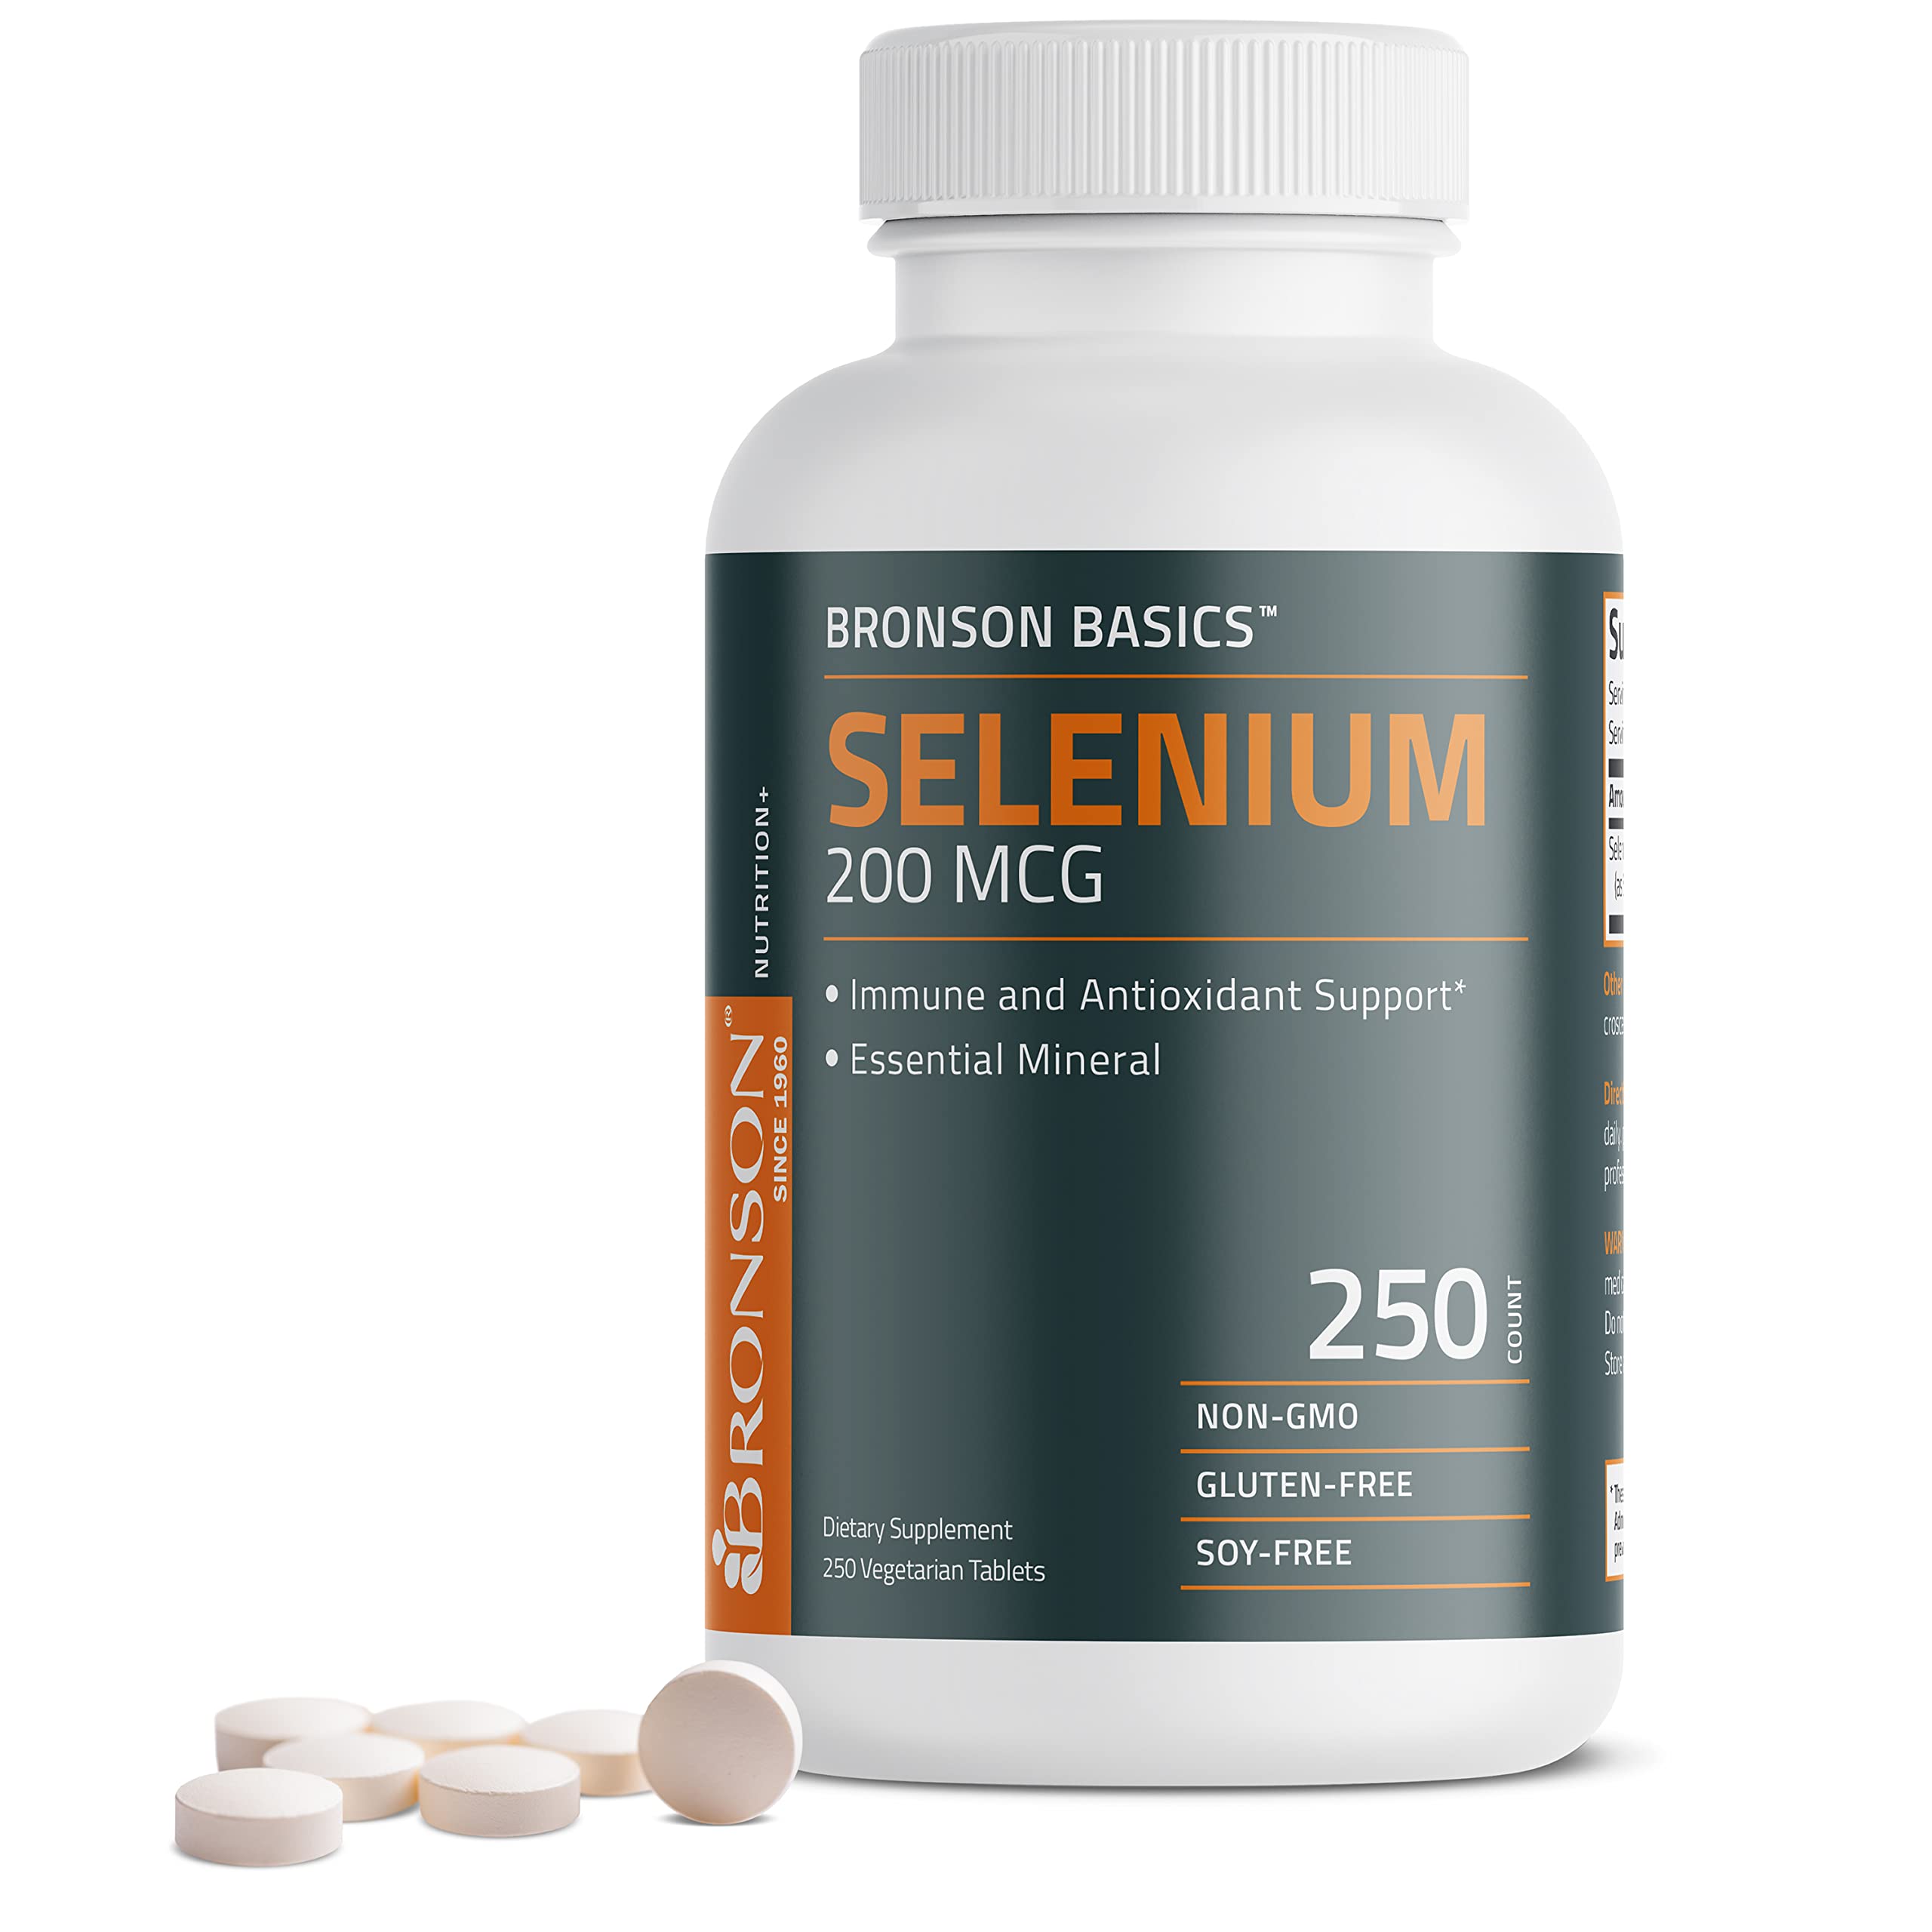 Selenium 200 mcg, 250 Vegetarian Tablets view 1 of 6